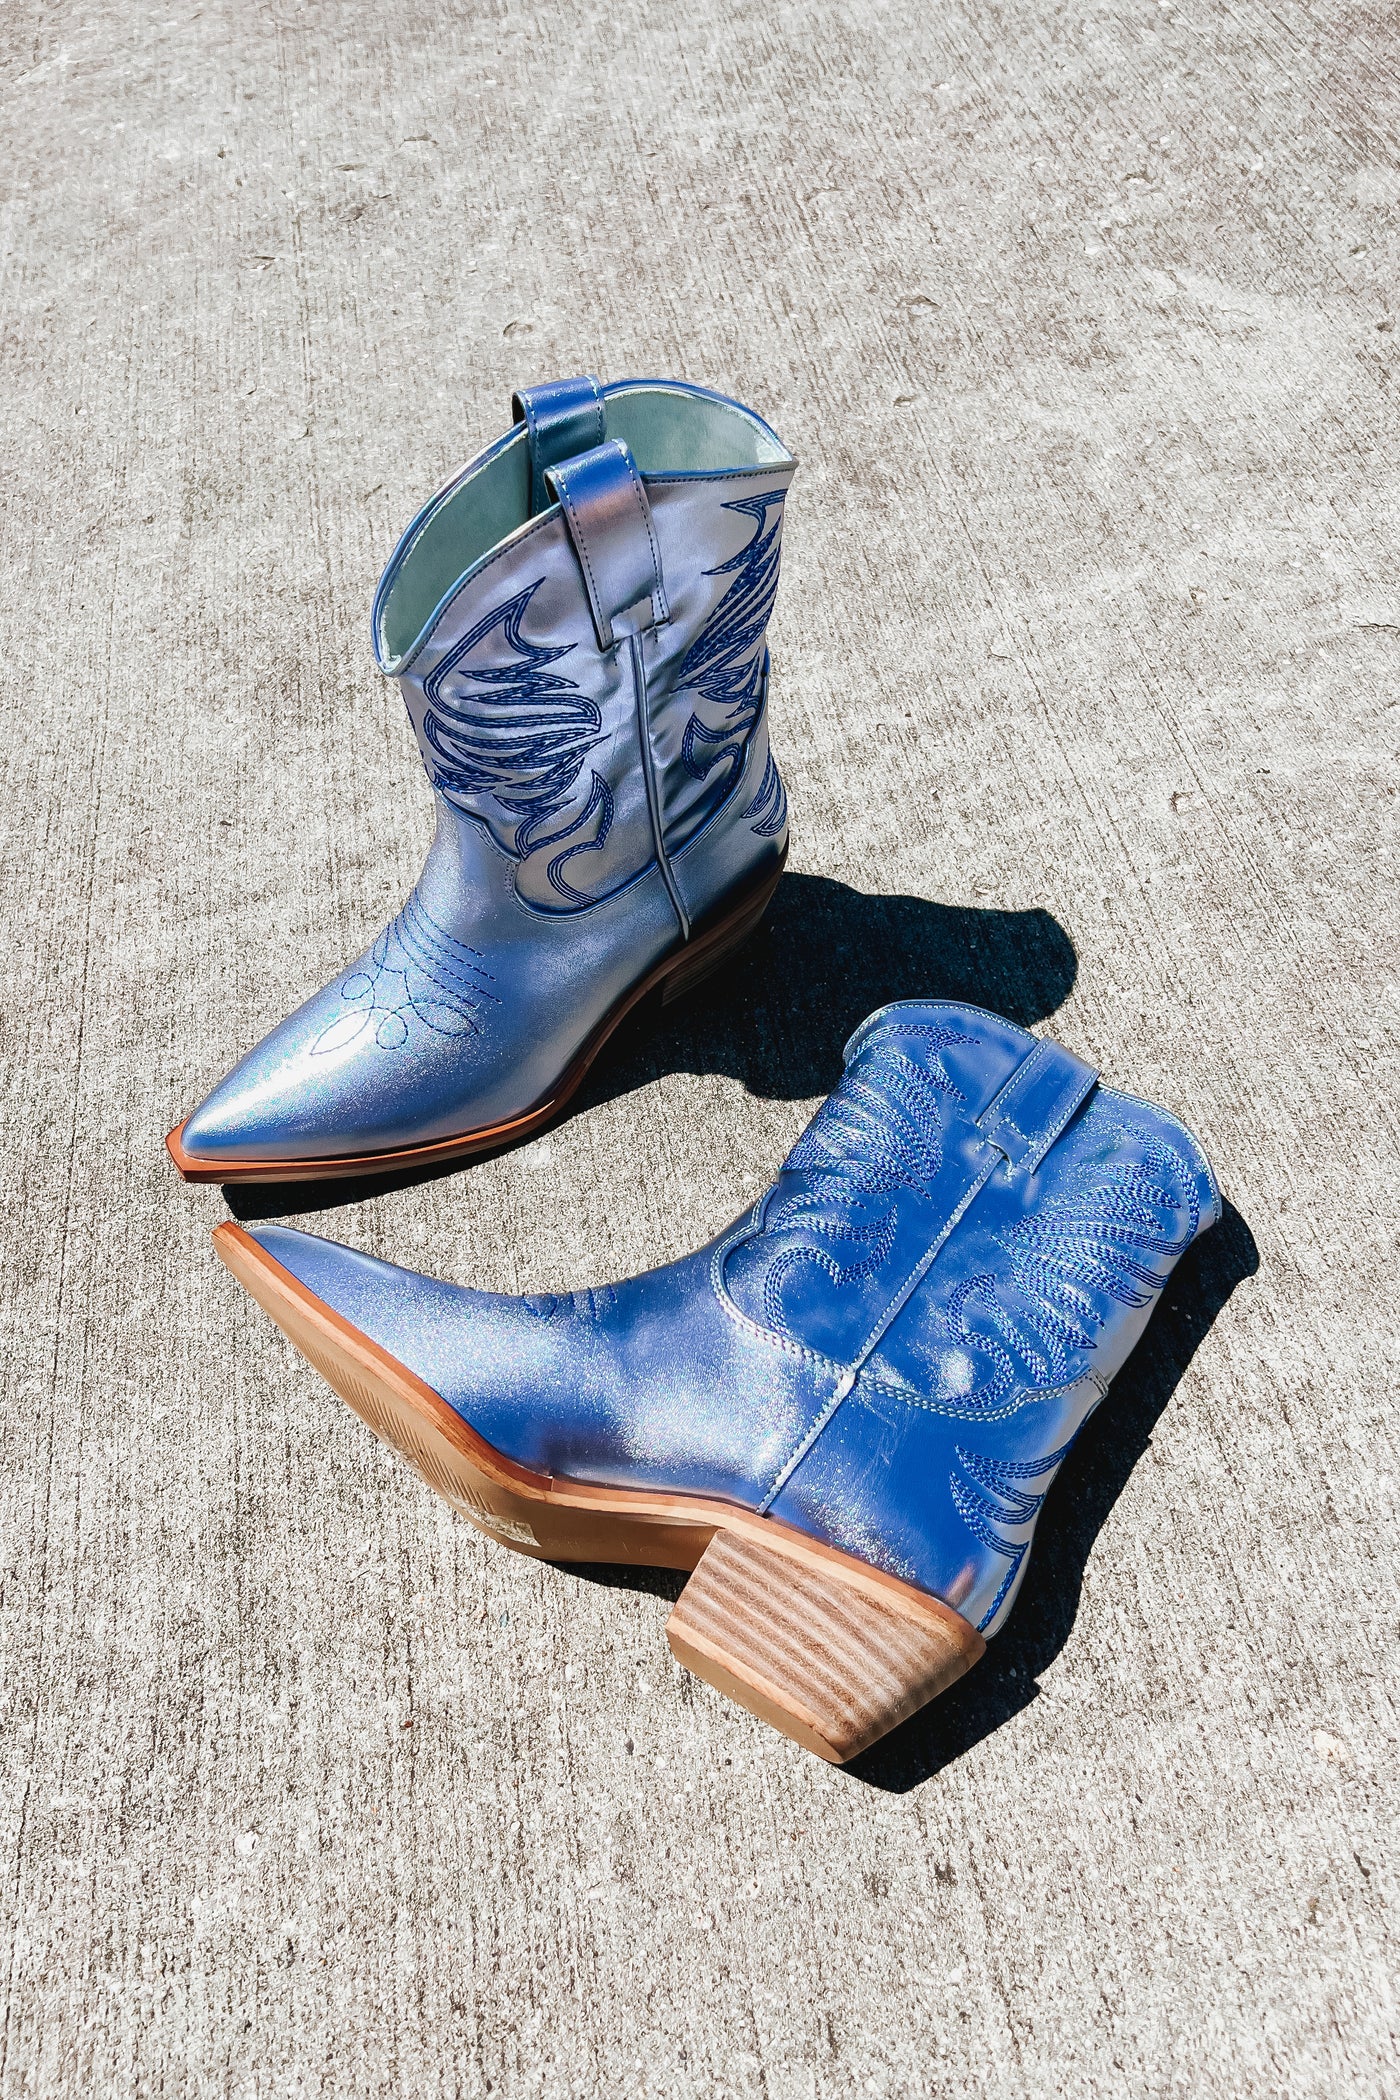 Zen Cowboy Boots